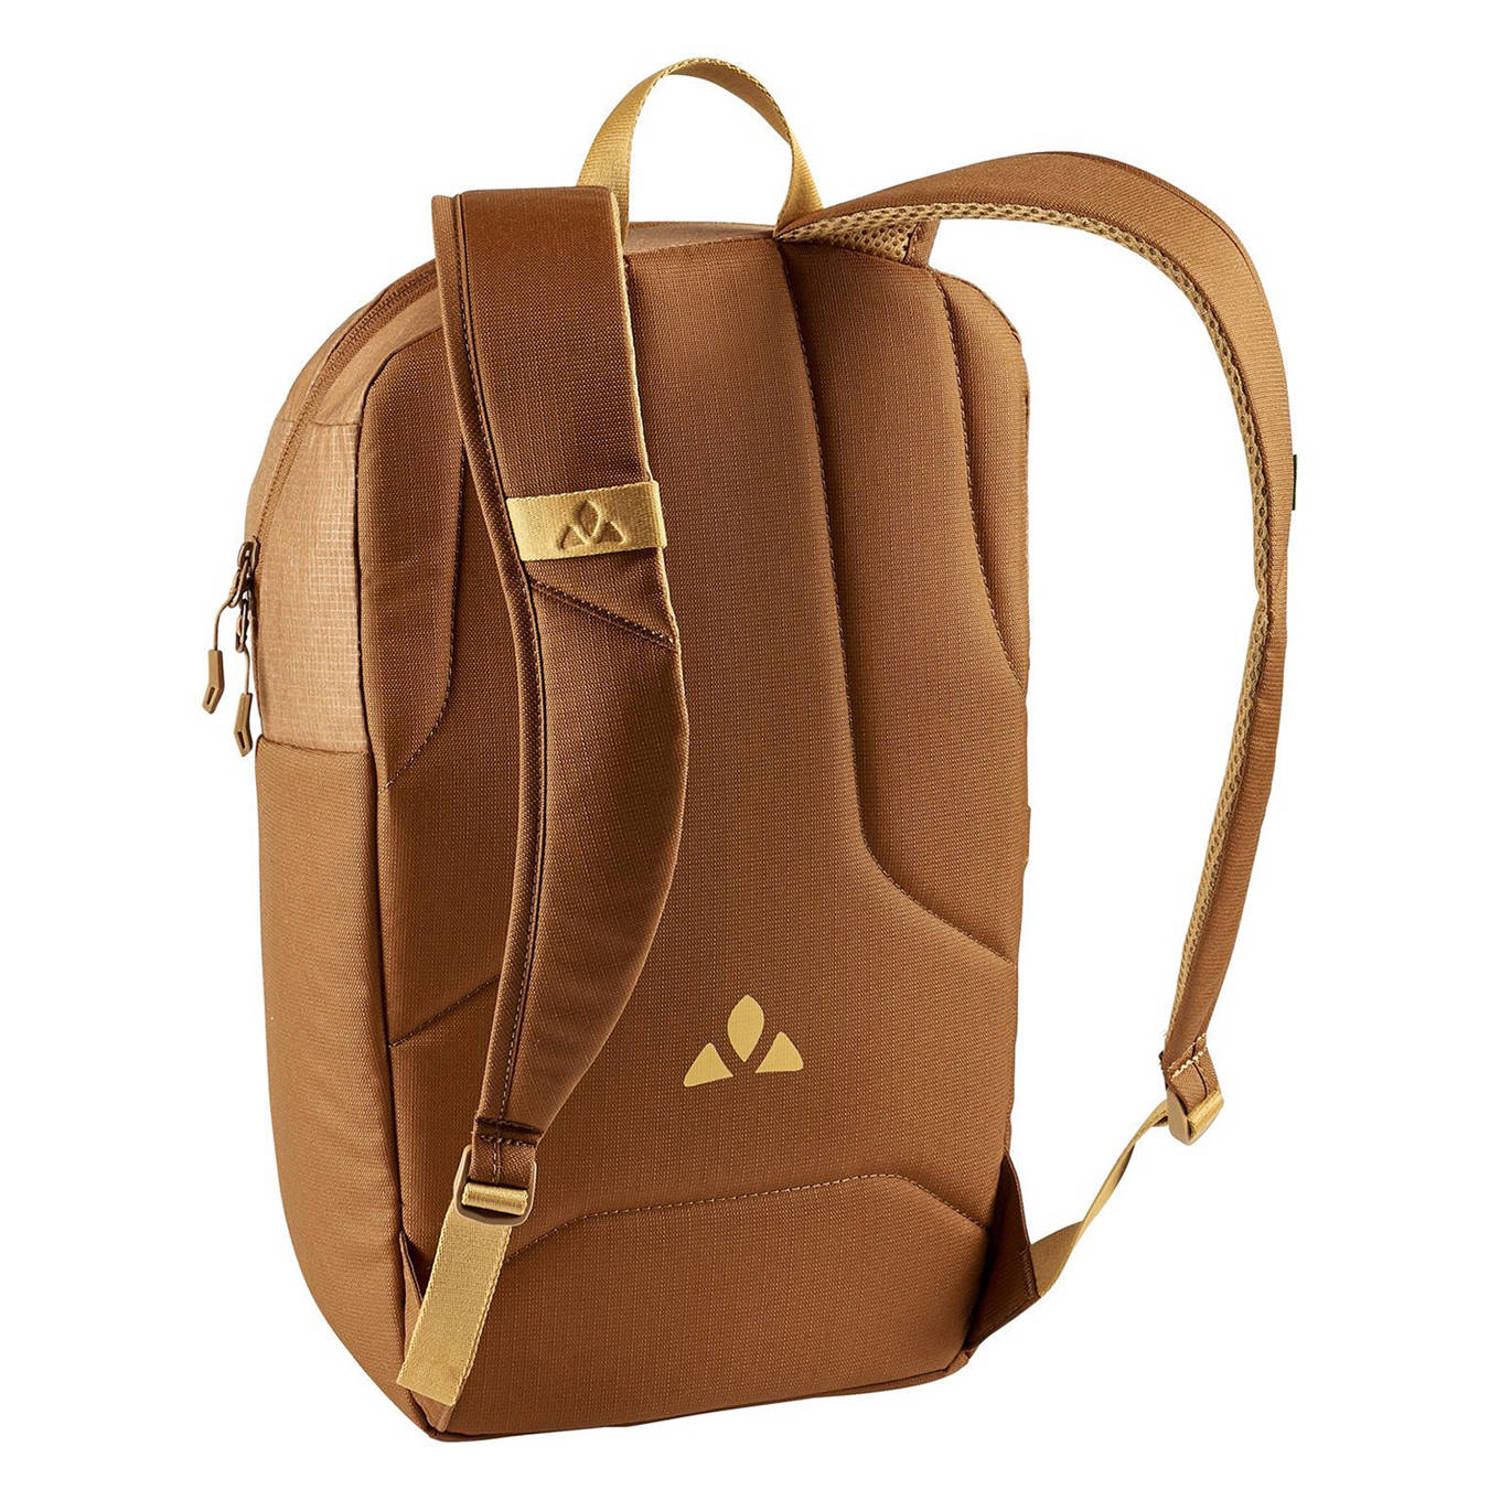 VAUDE backpack Yed 14L bruin